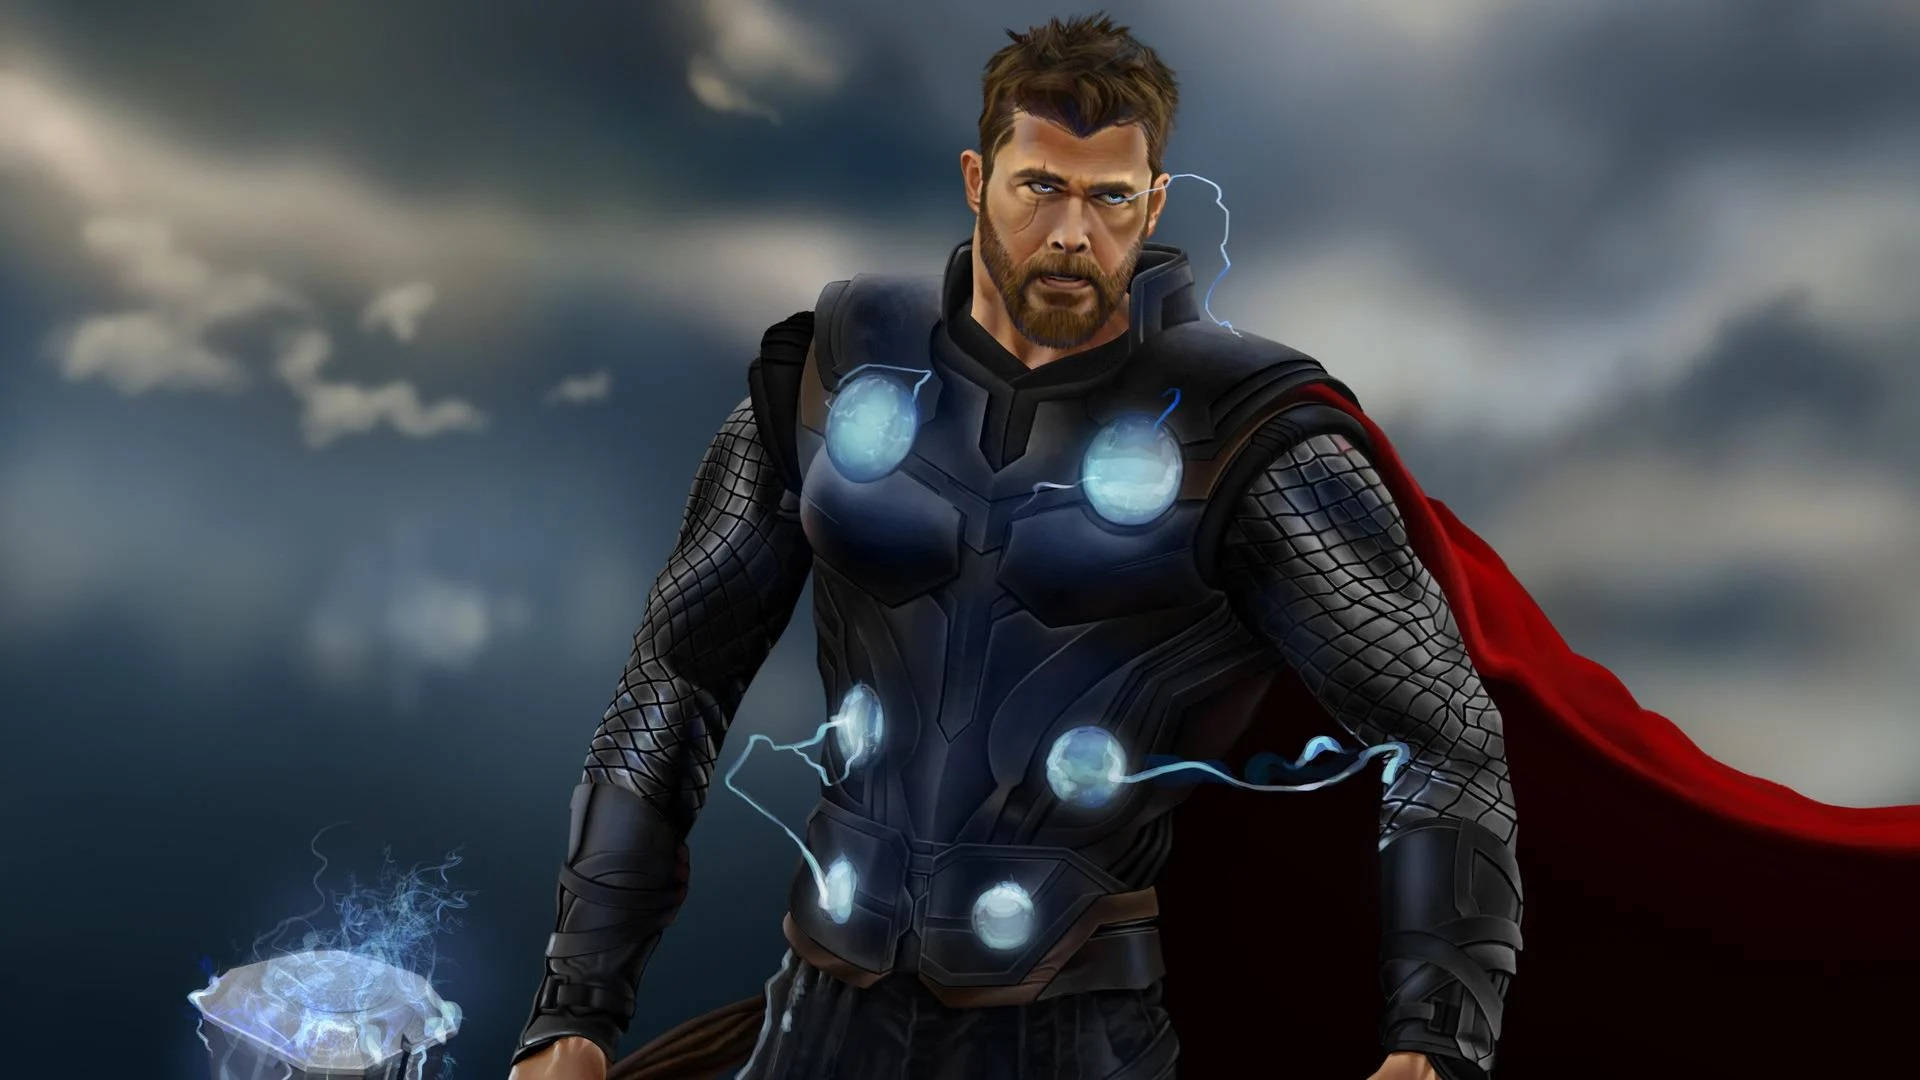 Thor Superhero From Marvel Comics Background